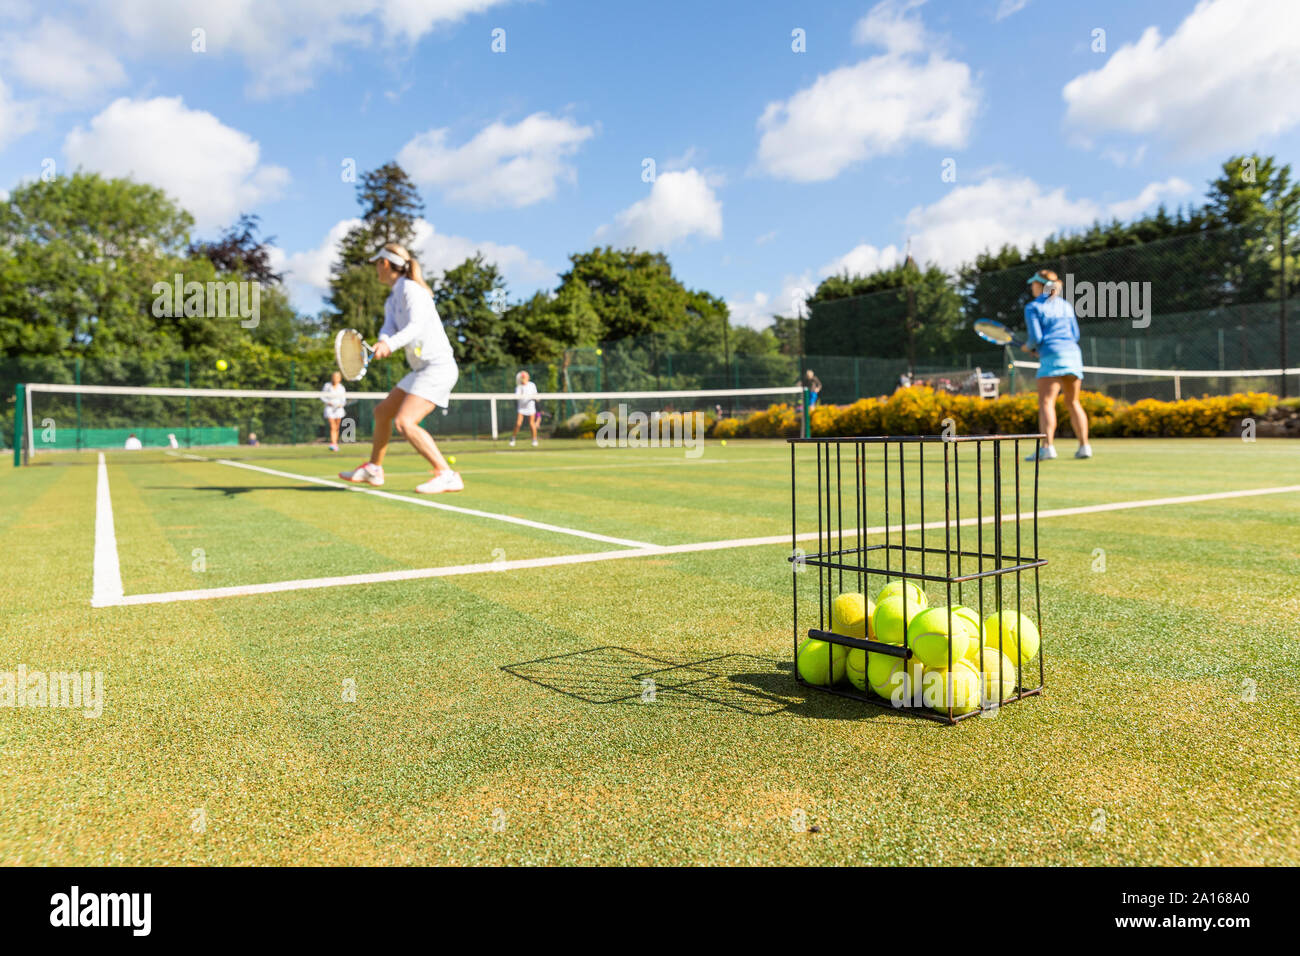 Mature women playing tennis on grass court Stock Photo